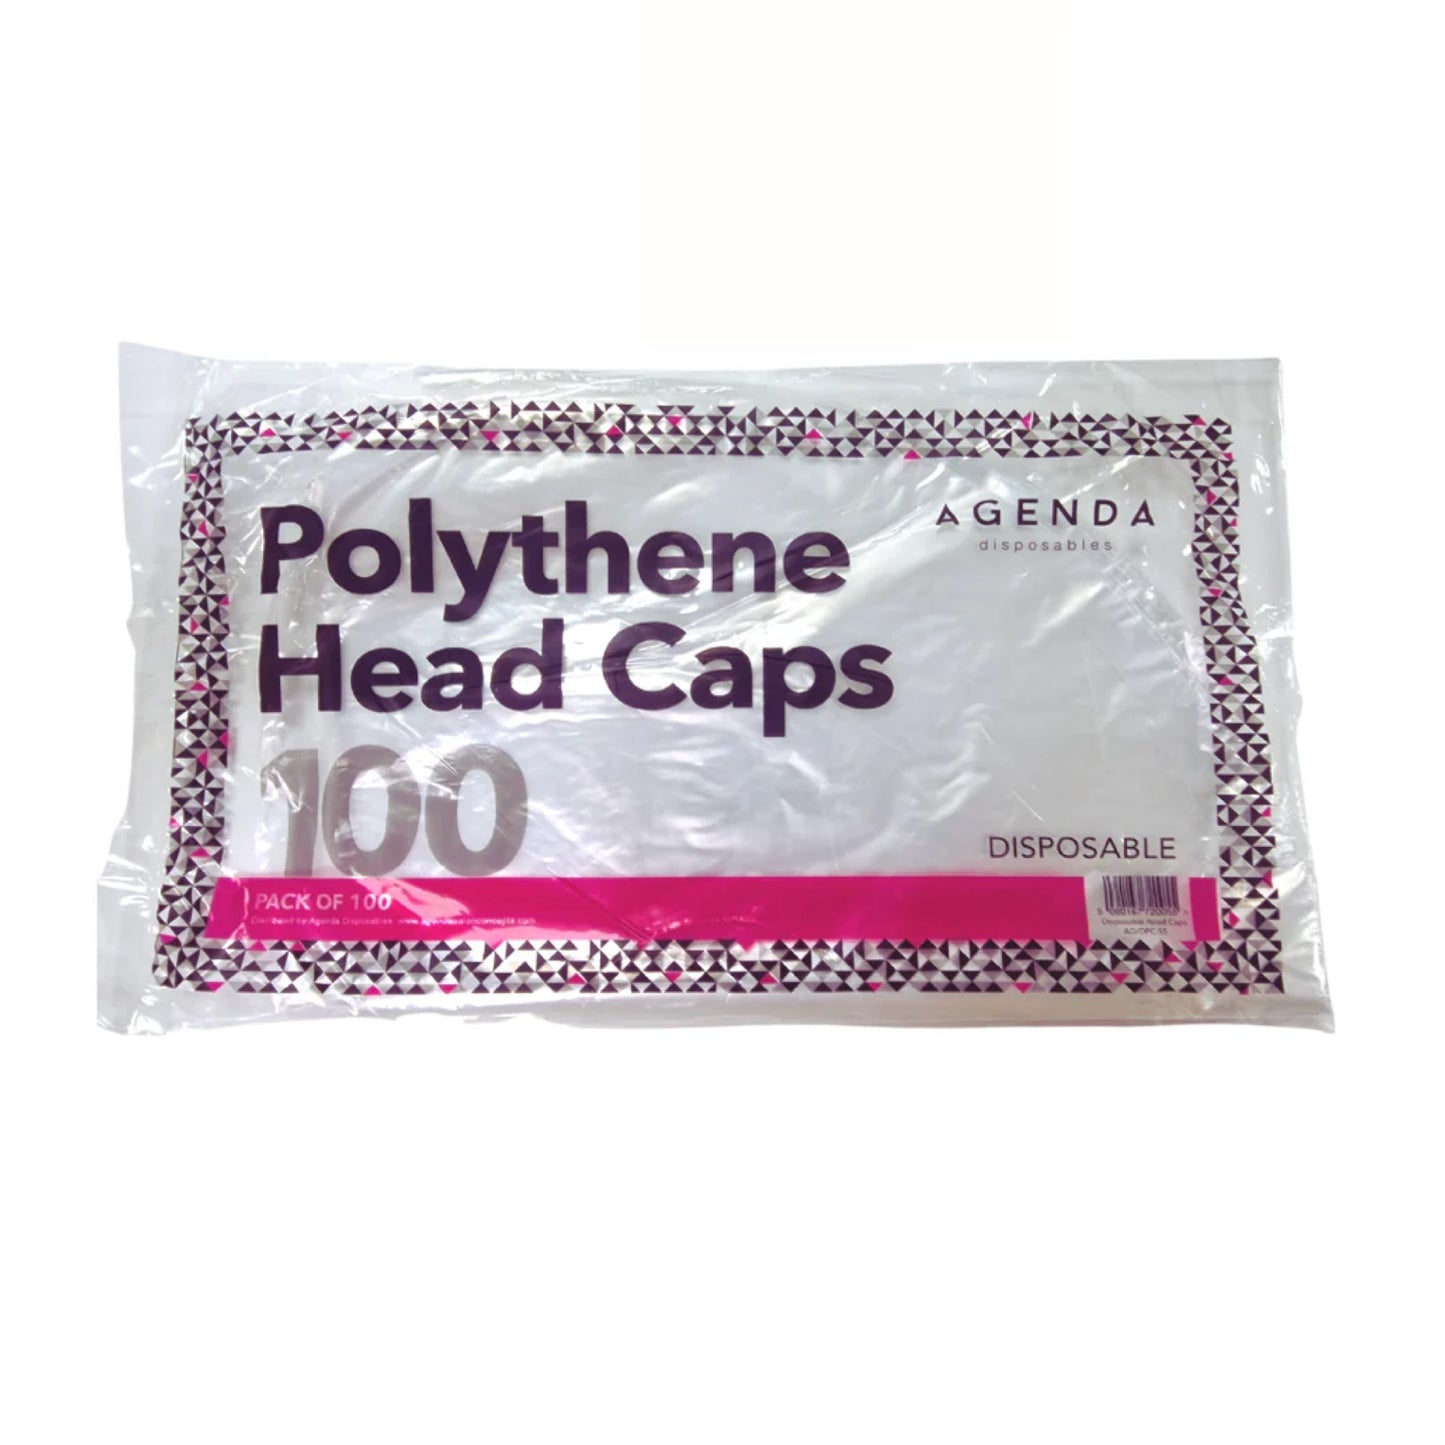 AGENDA Polythene Head Caps Disposable 100qty